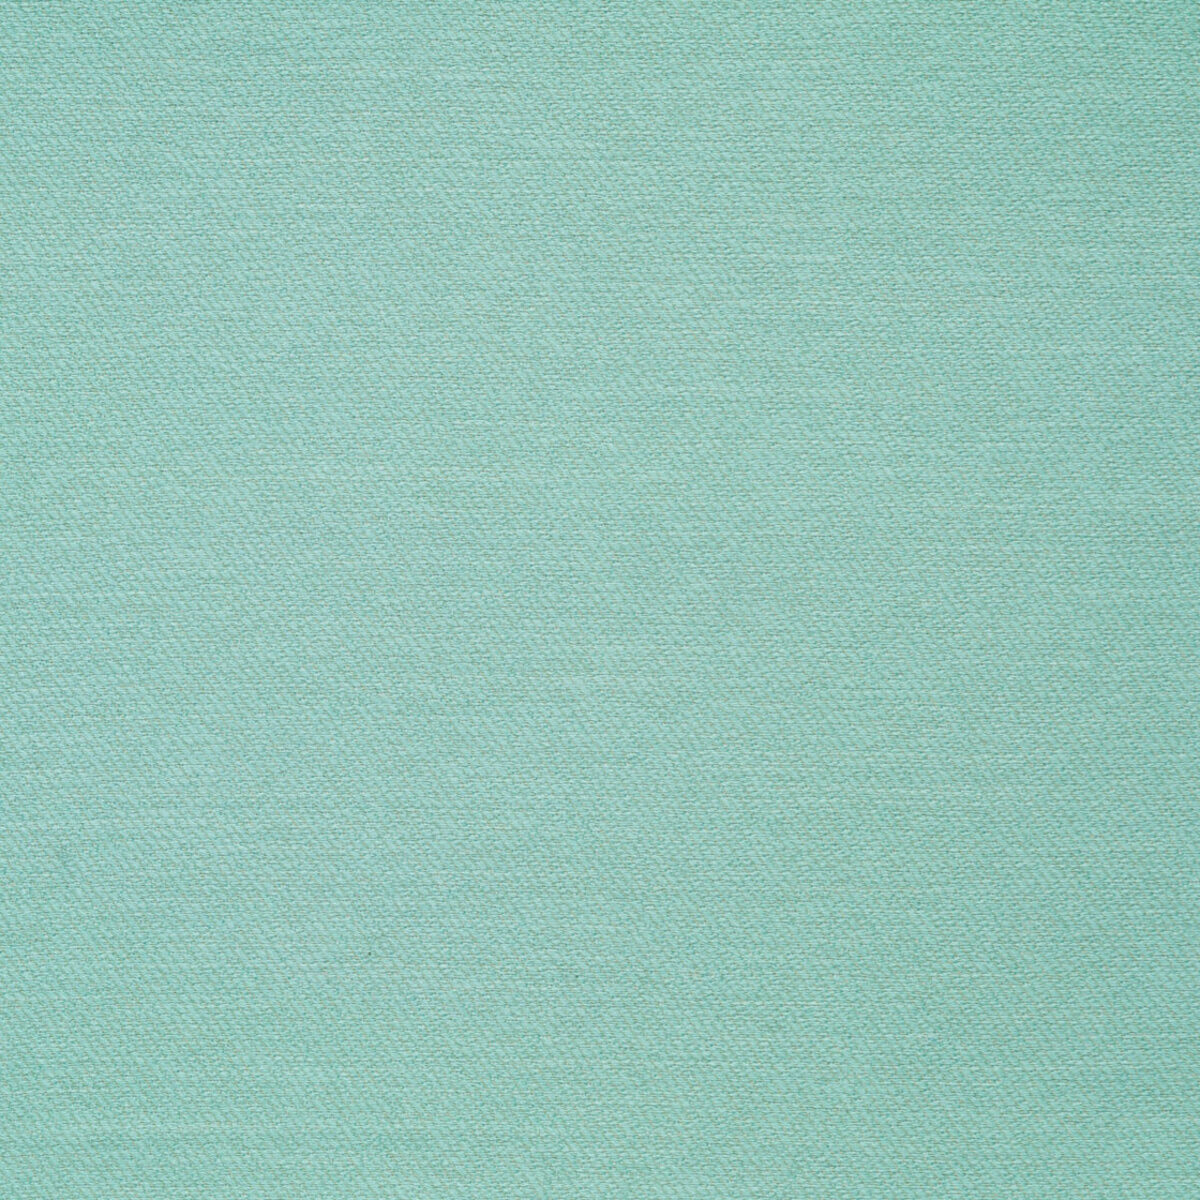 Simple Sea Green Fabric